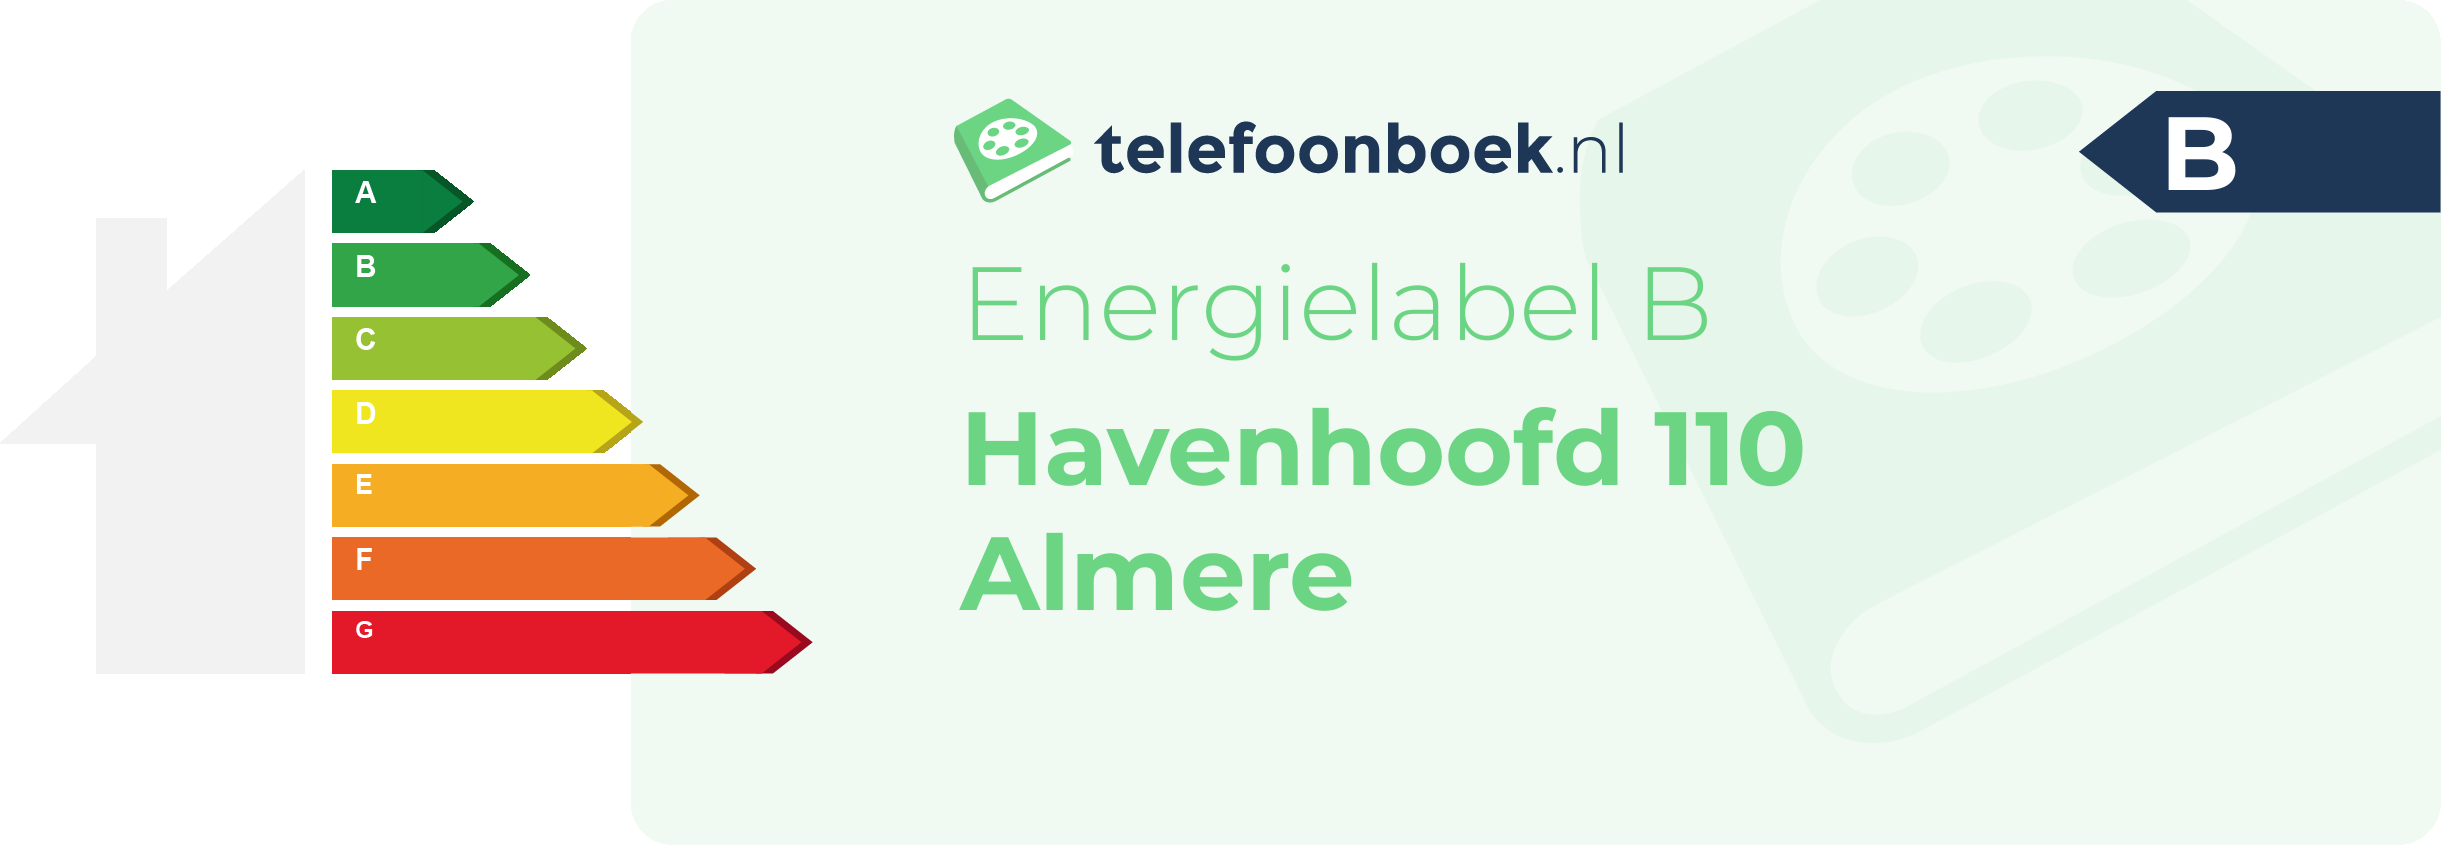 Energielabel Havenhoofd 110 Almere